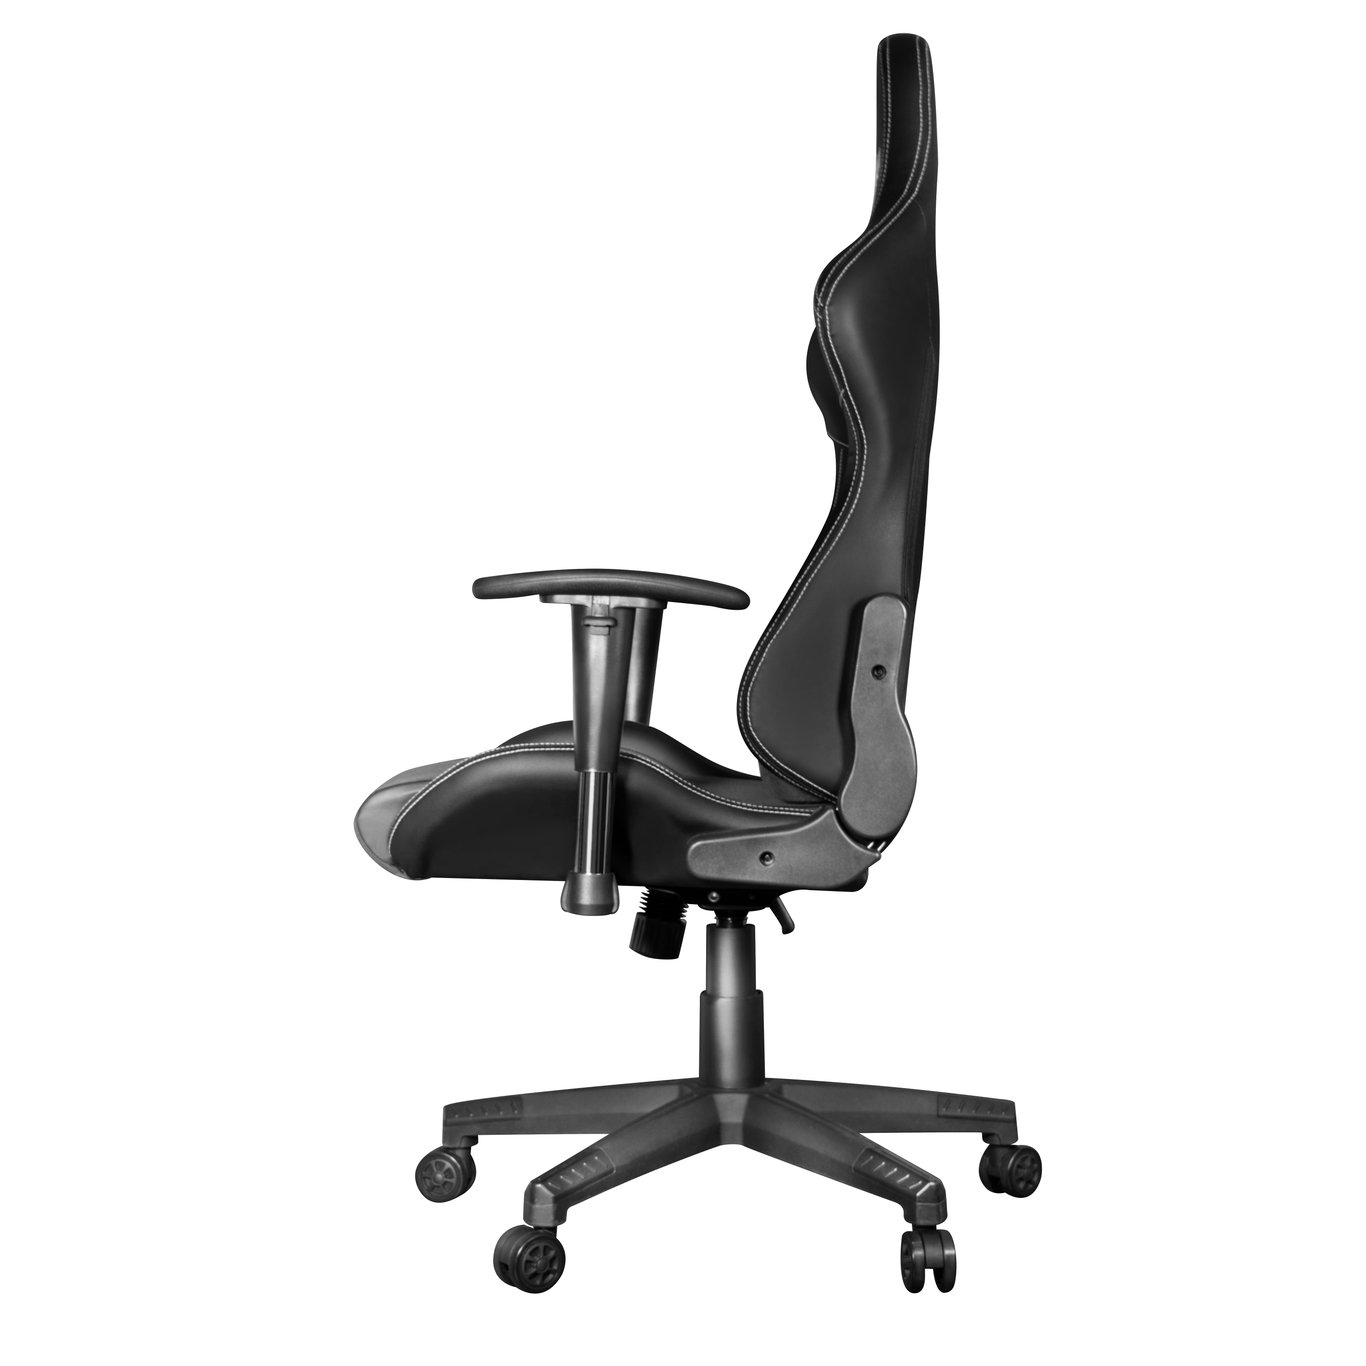 GALAX Gaming Chair Series GC-04  - Black -4